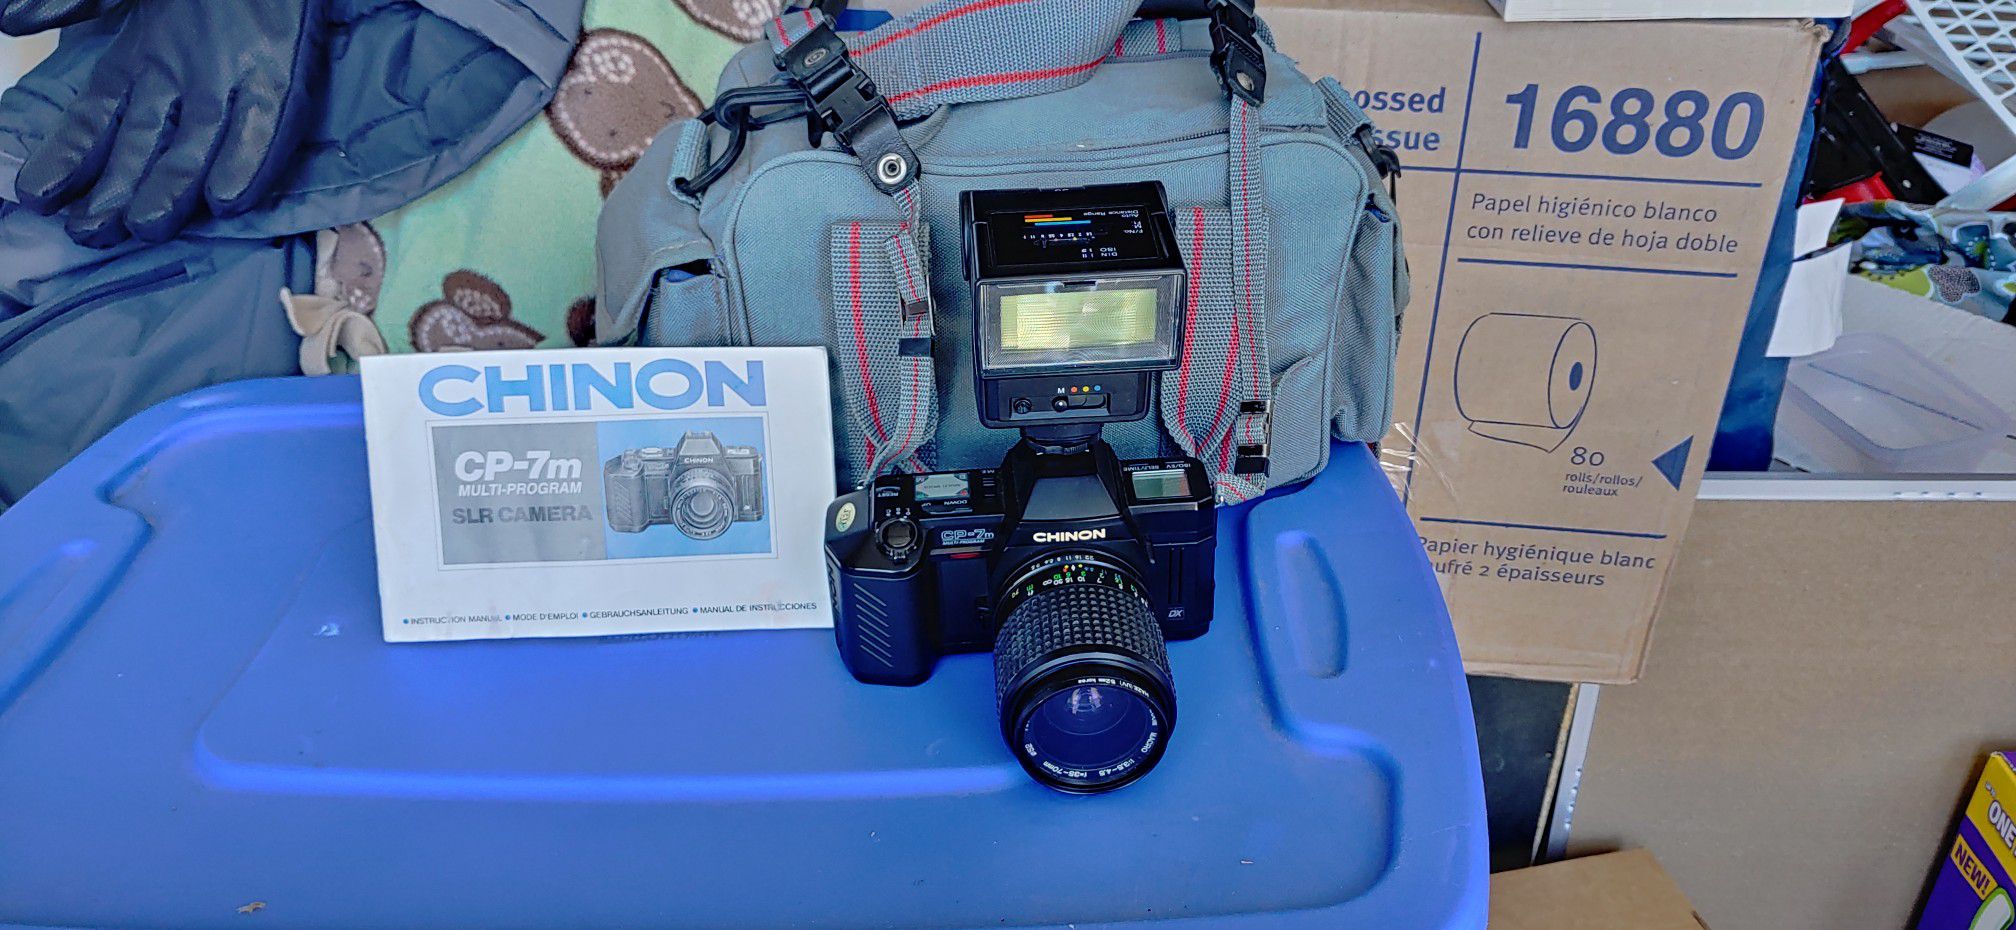 Chinon 35 mm camera